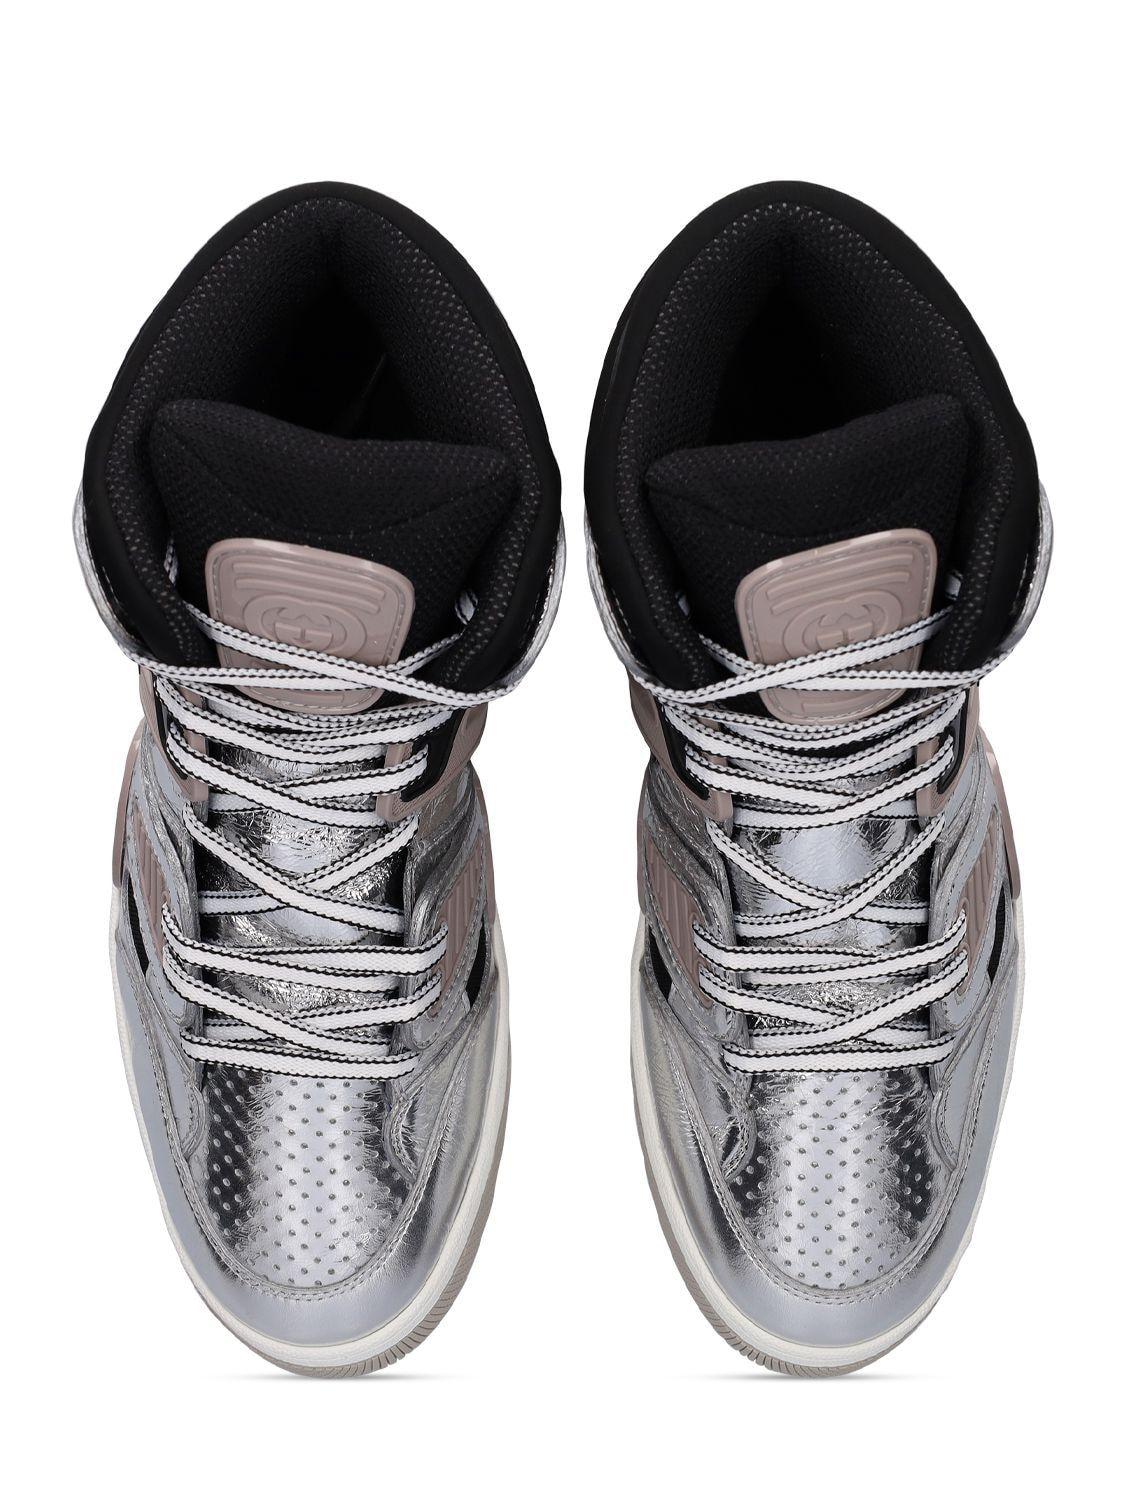 Gucci Basket metallic-leather sneakers - Grey